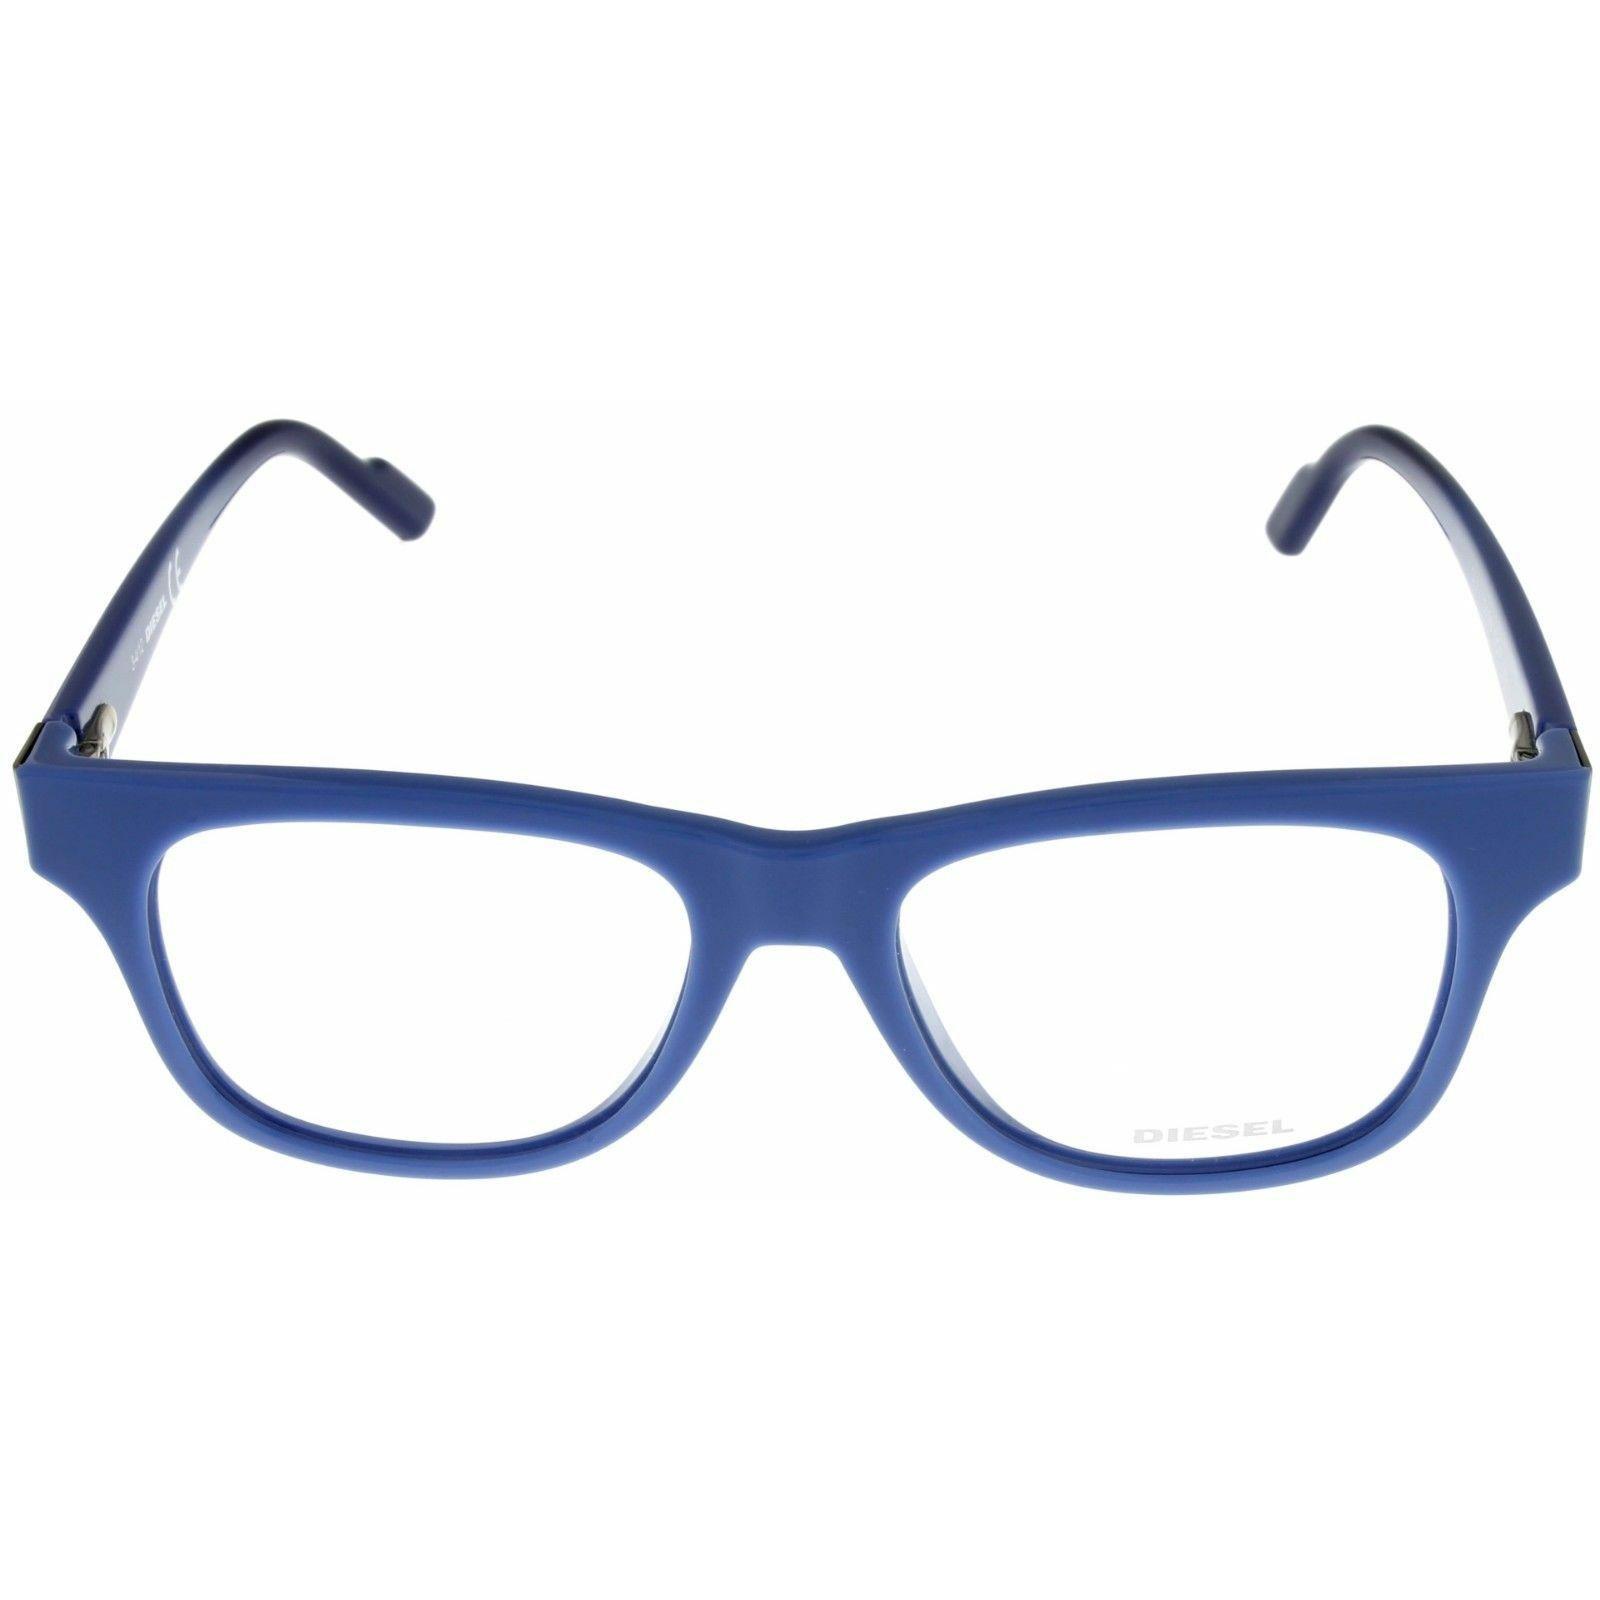 Diesel Unisex Prescription Eyeglasses Frame Lilac Rectangular DL5041 078